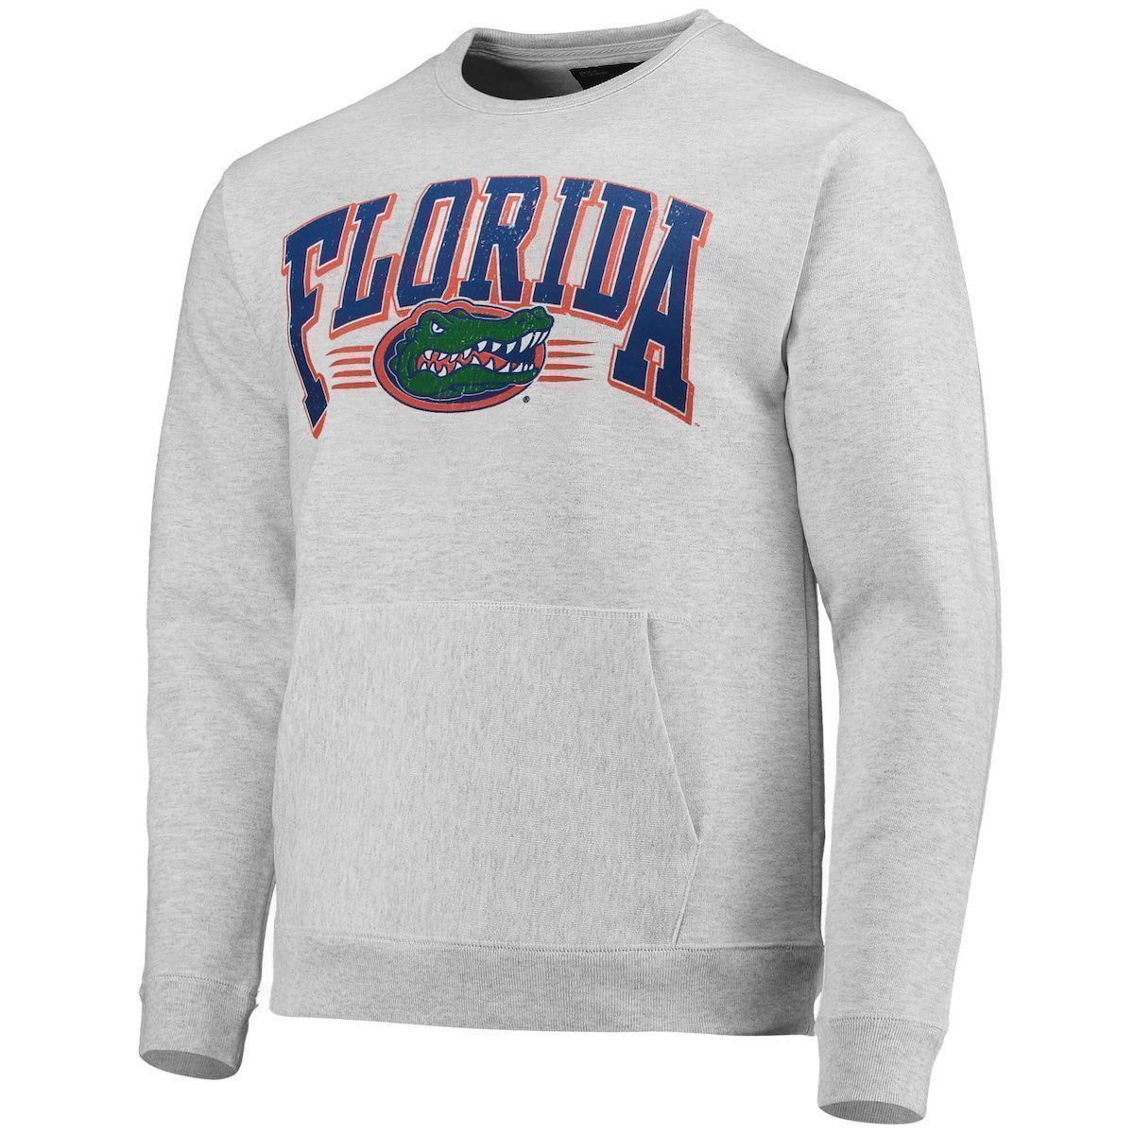 League Collegiate Wear Men's Heathered Gray Florida Gators Upperclassman Pocket Pullover Sweatshirt - Image 3 of 4